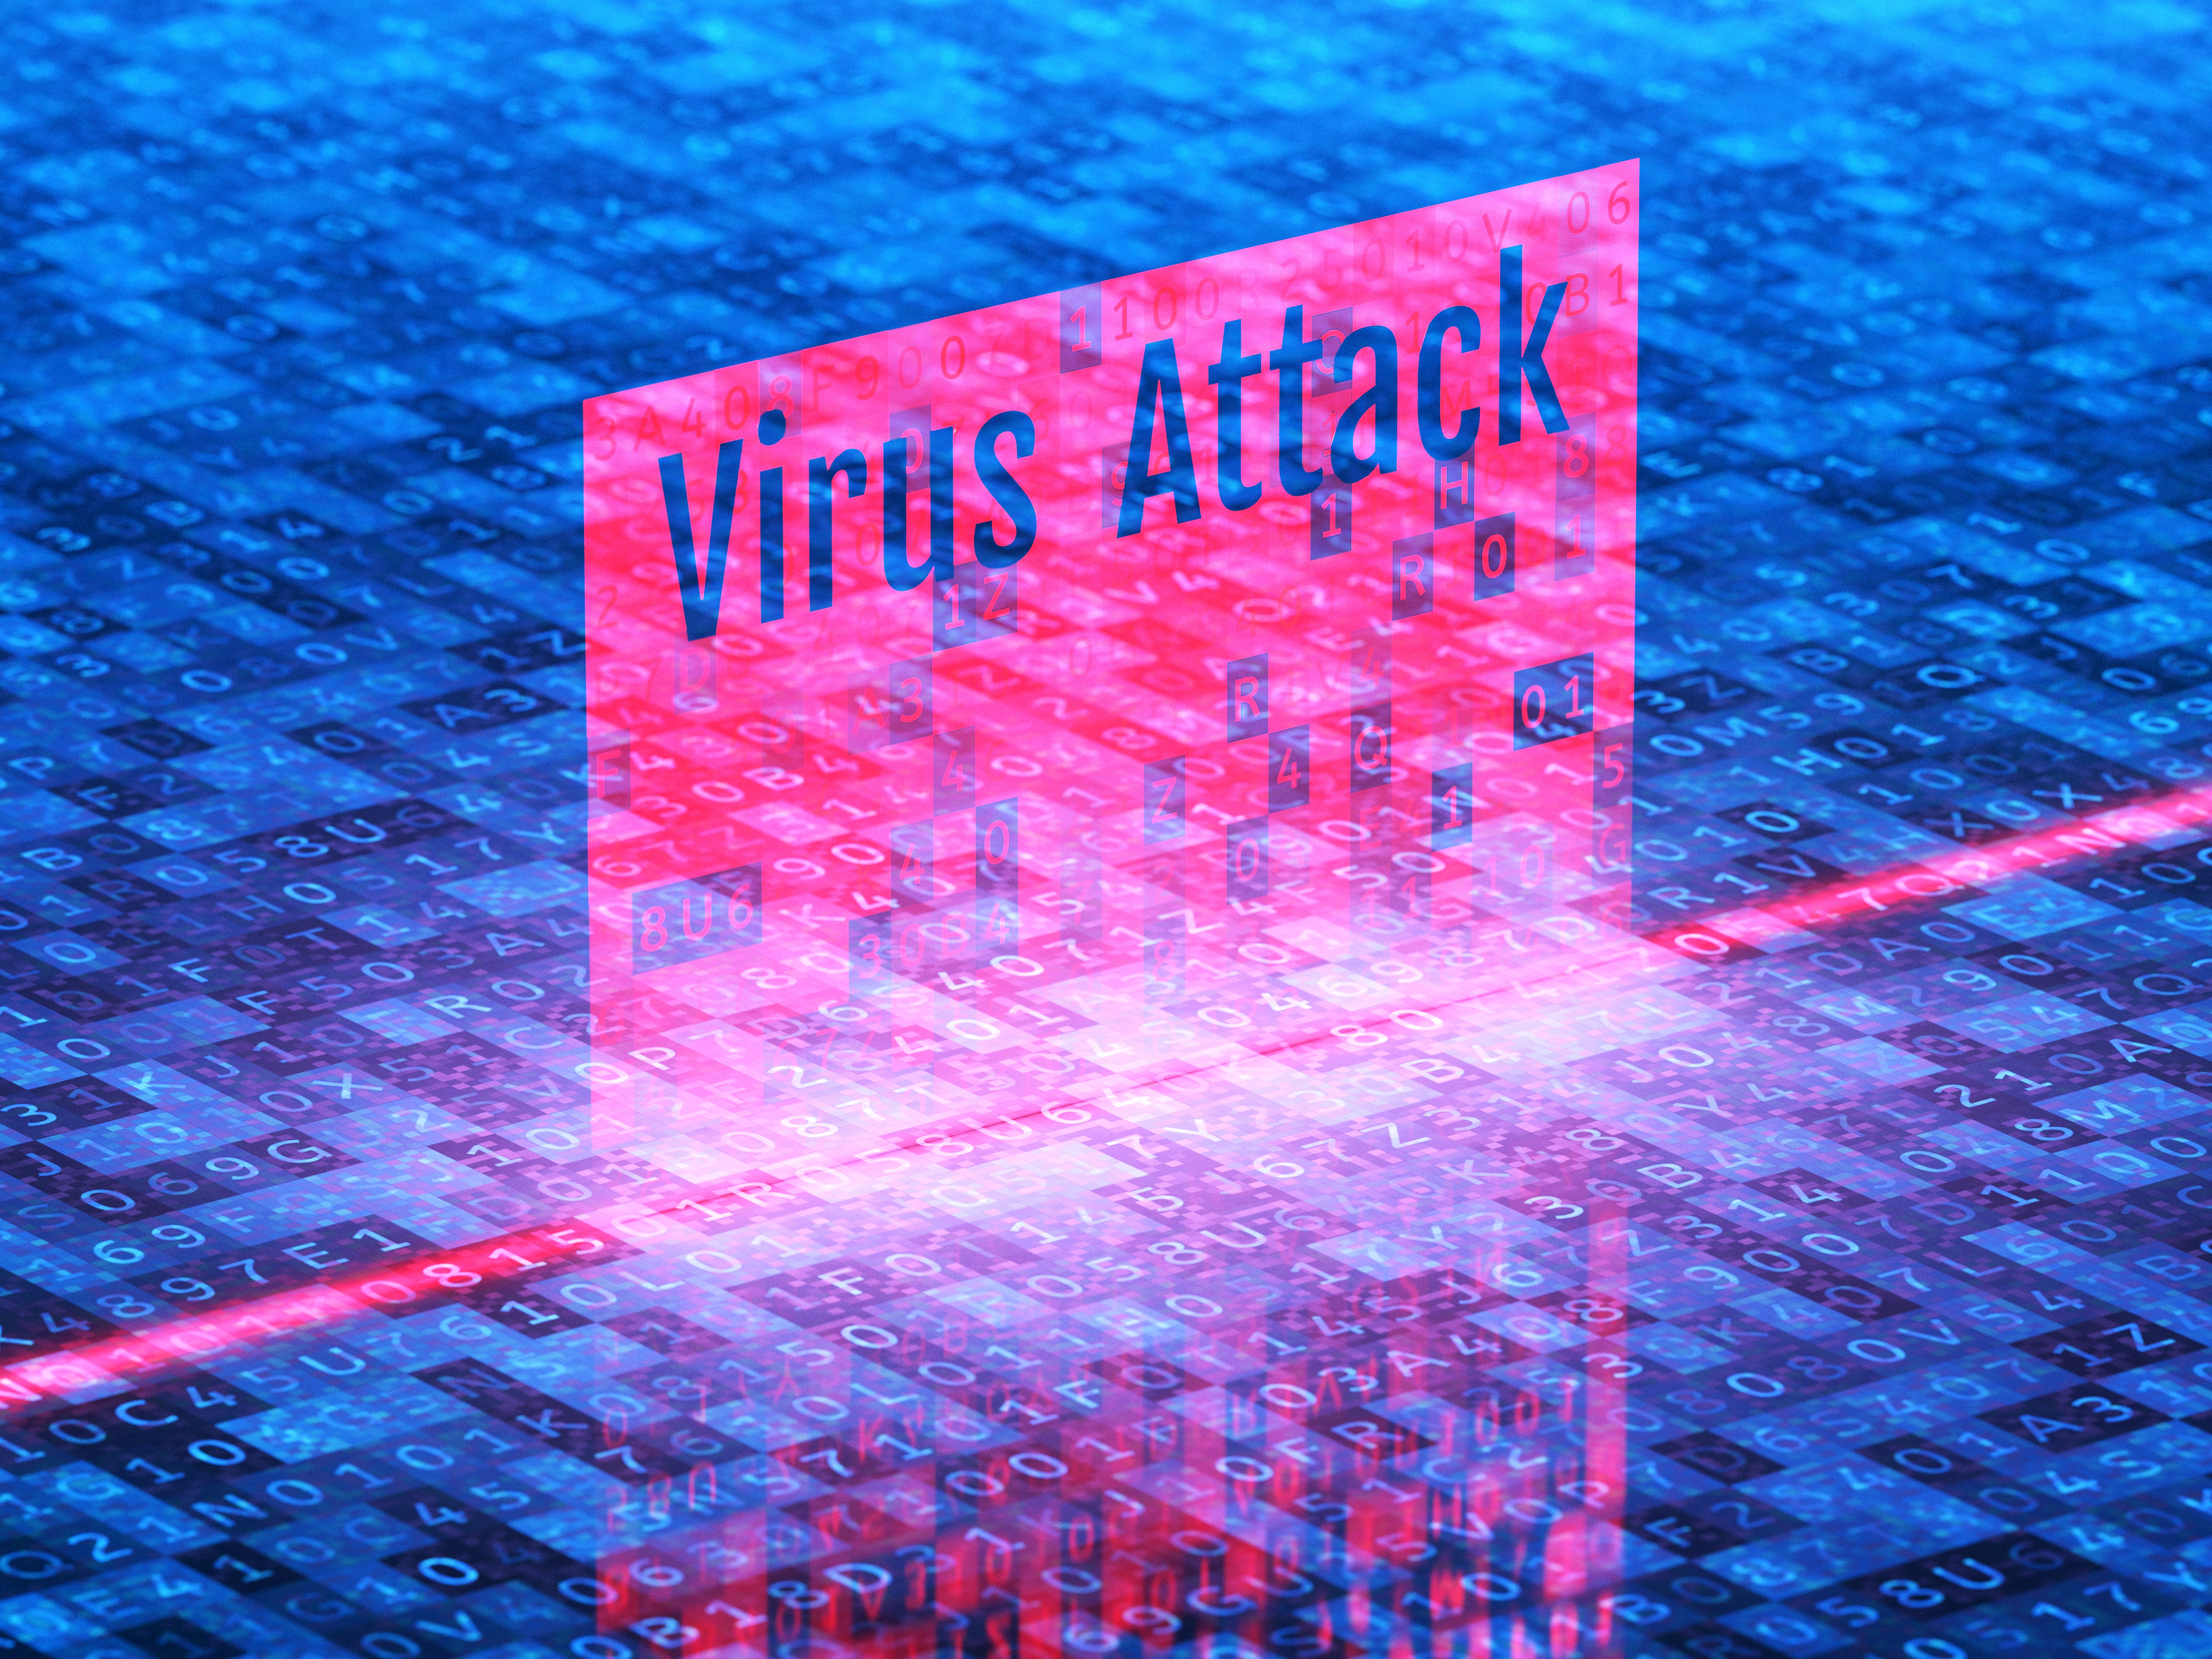 China y Rusia perturban al planeta con virus cibernéticos